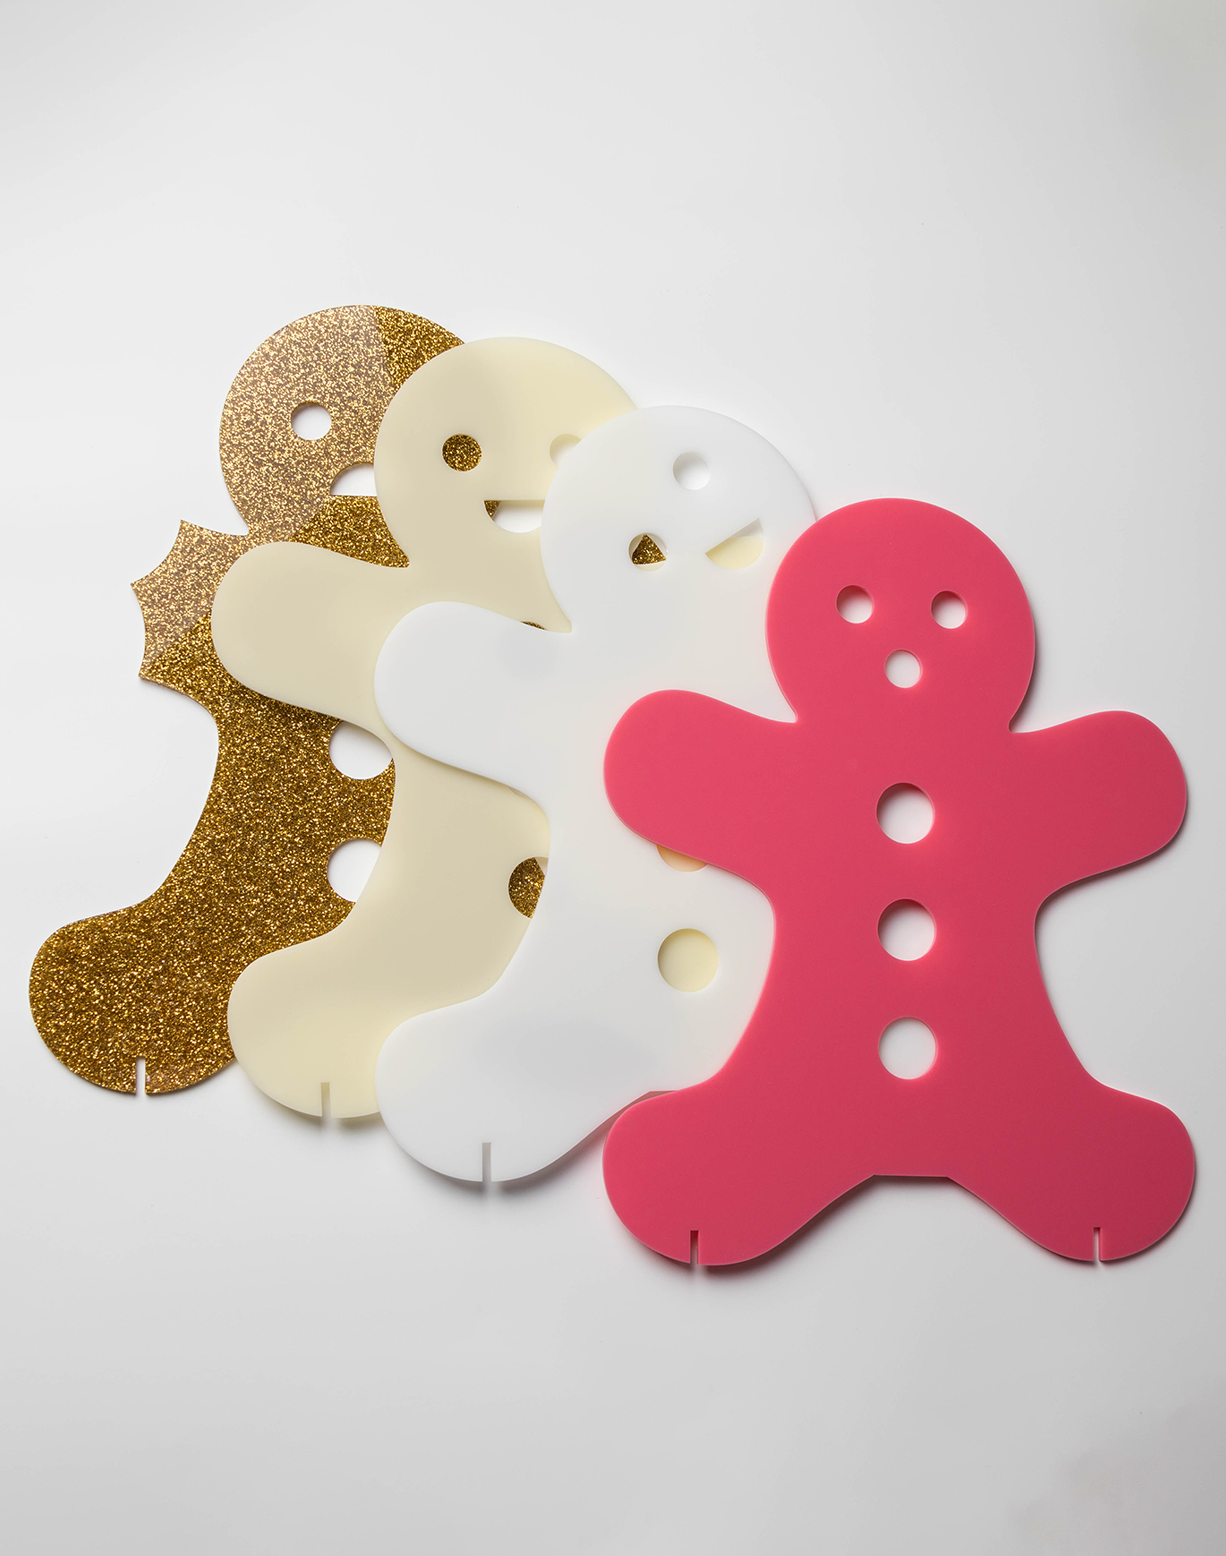 Oversized Acrylic Gingerbread Man Displays